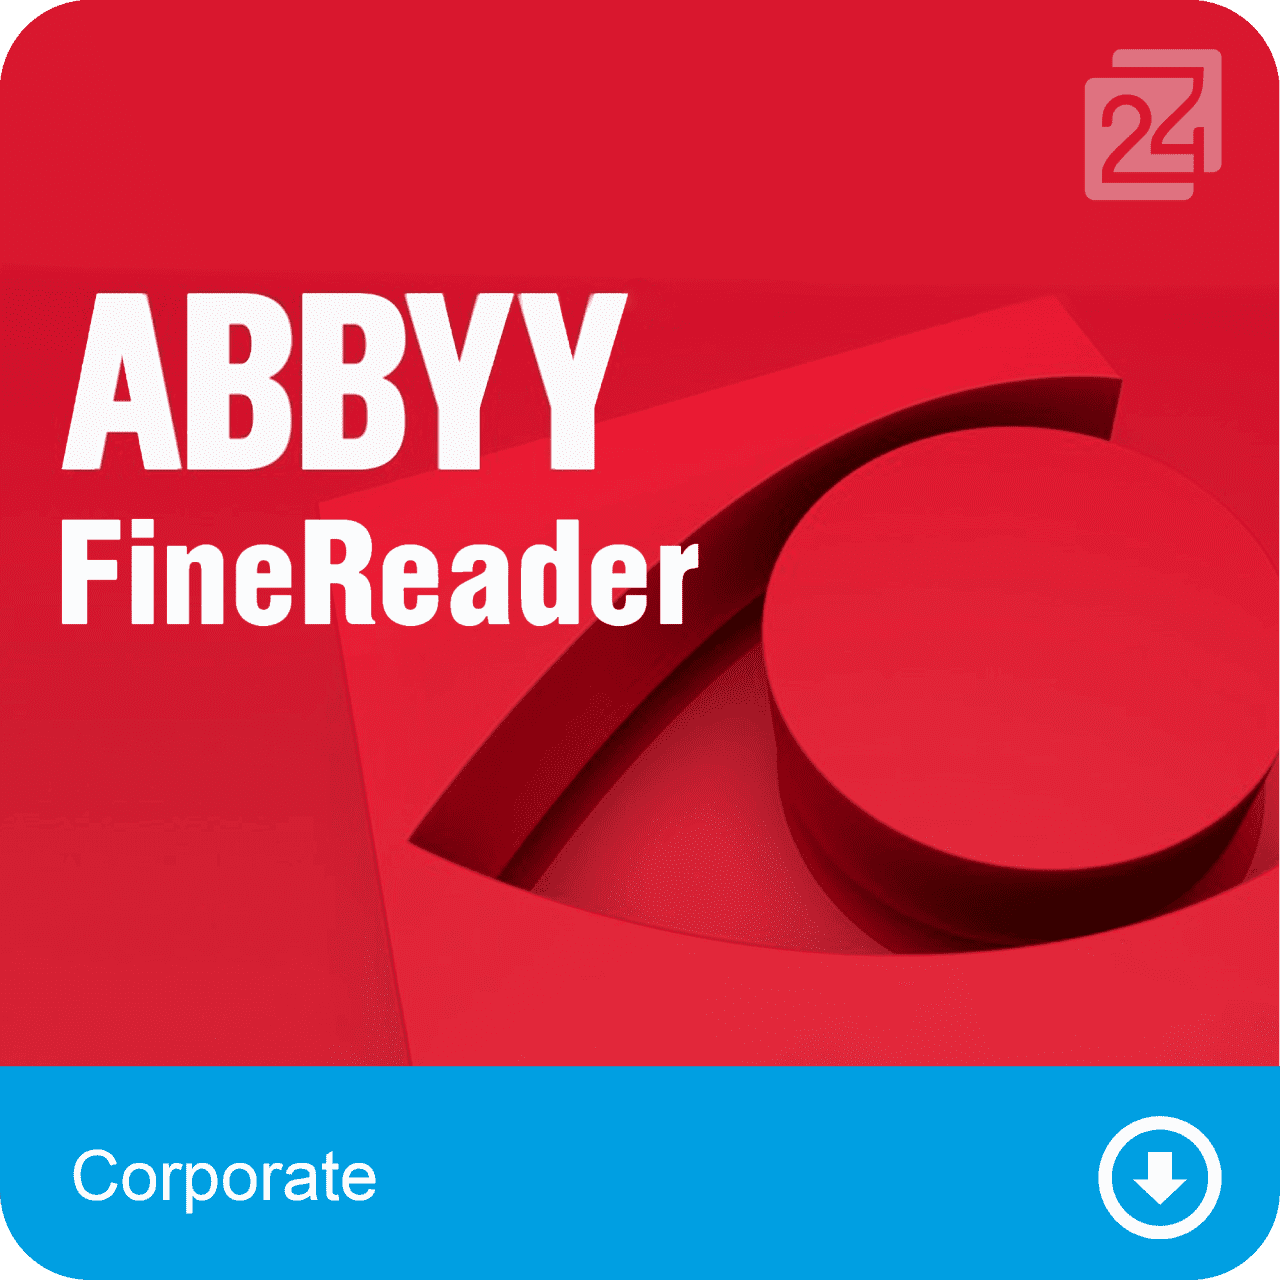 ABBYY FineReader 15 Corporate, 1 User, WIN, Full Version, Download